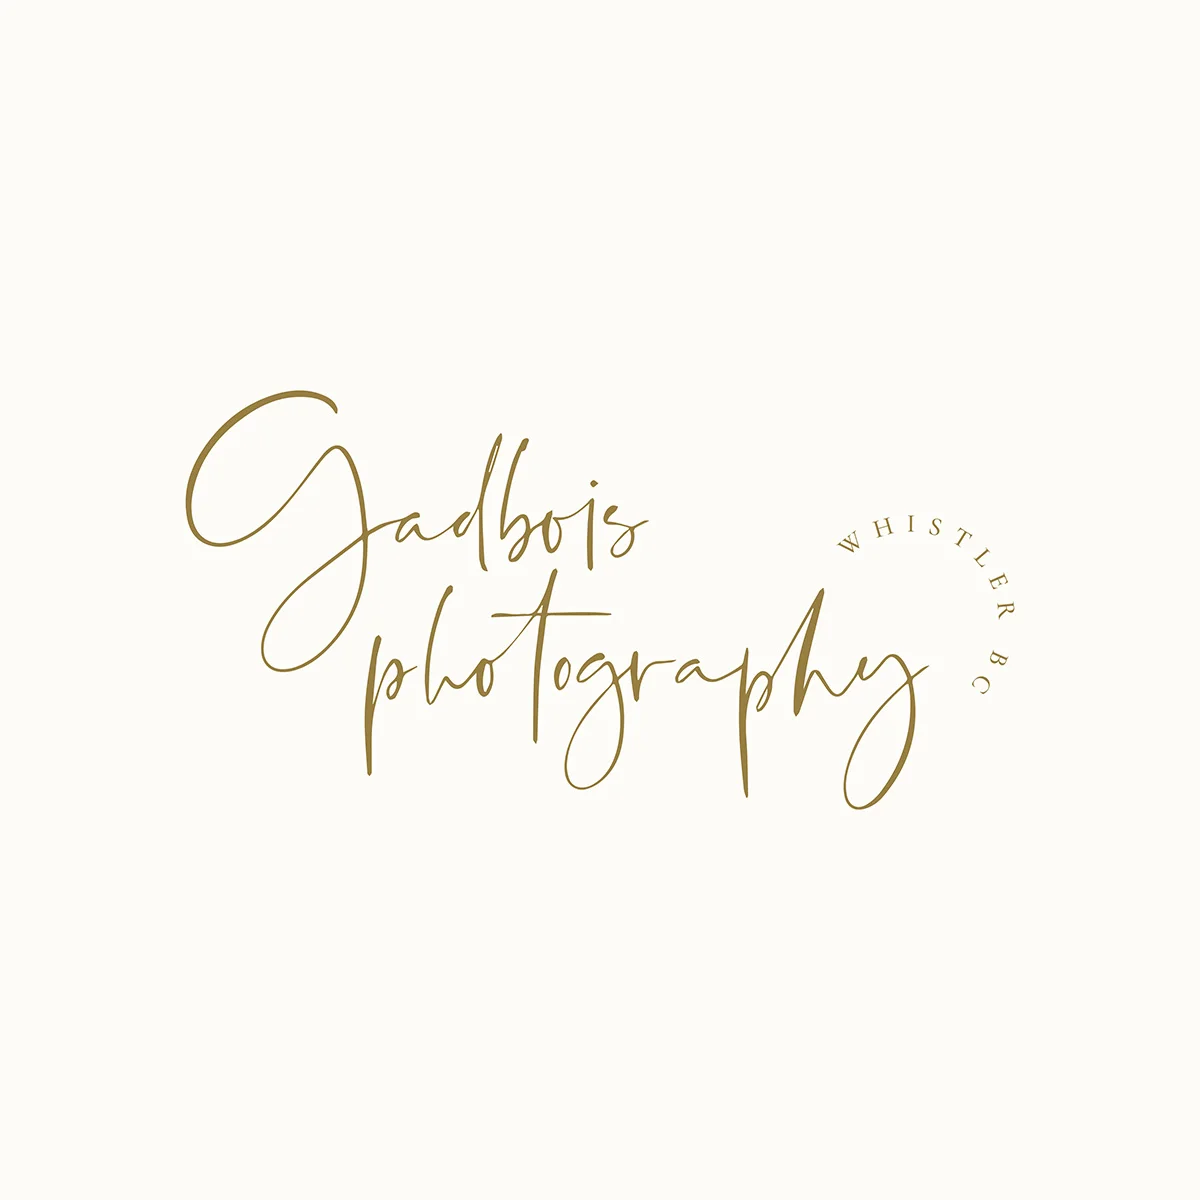 lindsay-mcghee-designs-gadbois-photography-logo-Whistler-BC-1200x1200